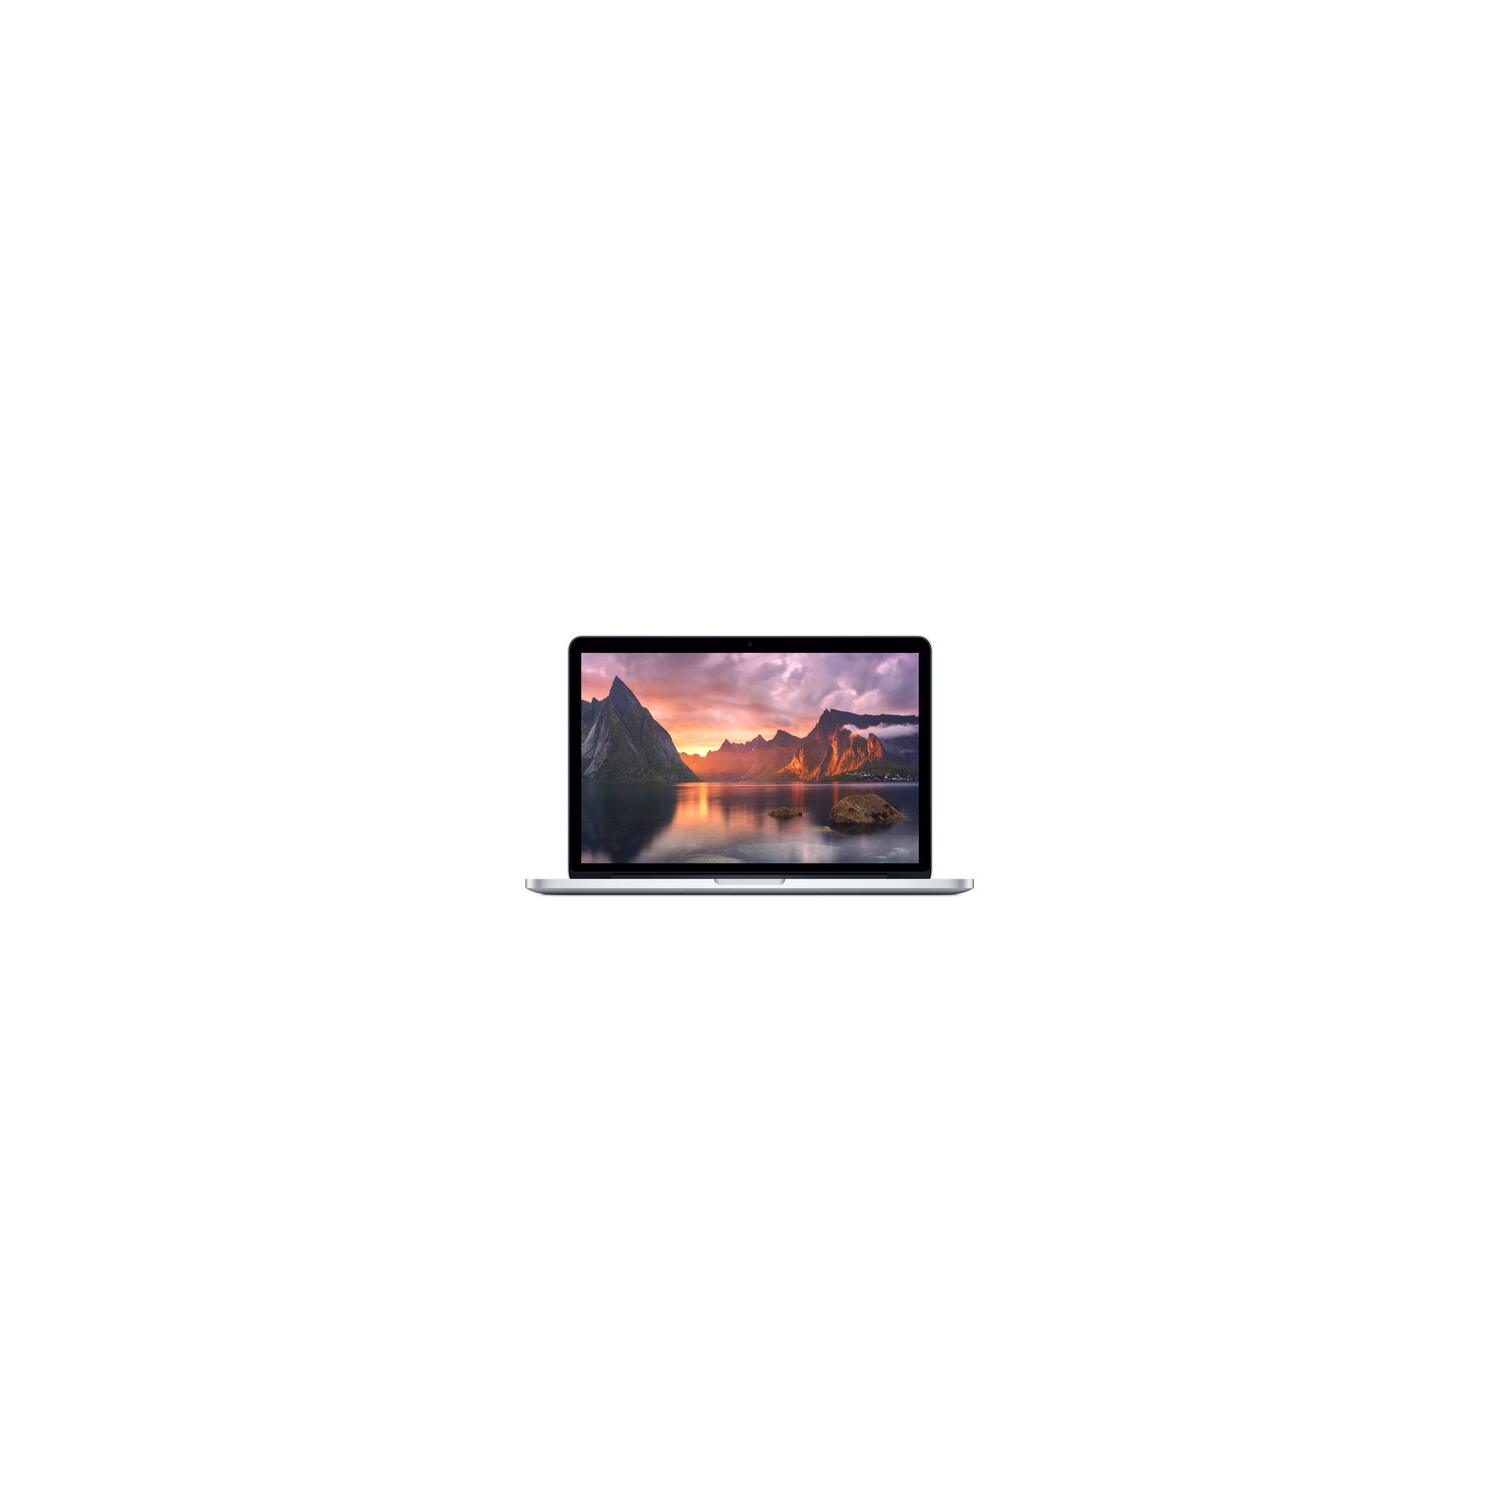 Refurbished (Excellent) - Apple MacBook Pro 13.3" Retina (Intel Core i5 2.7 GHz / 8GB RAM / 128GB SSD) 2015, Model MF839LL/A* w/ Apple Original Charger, Certified